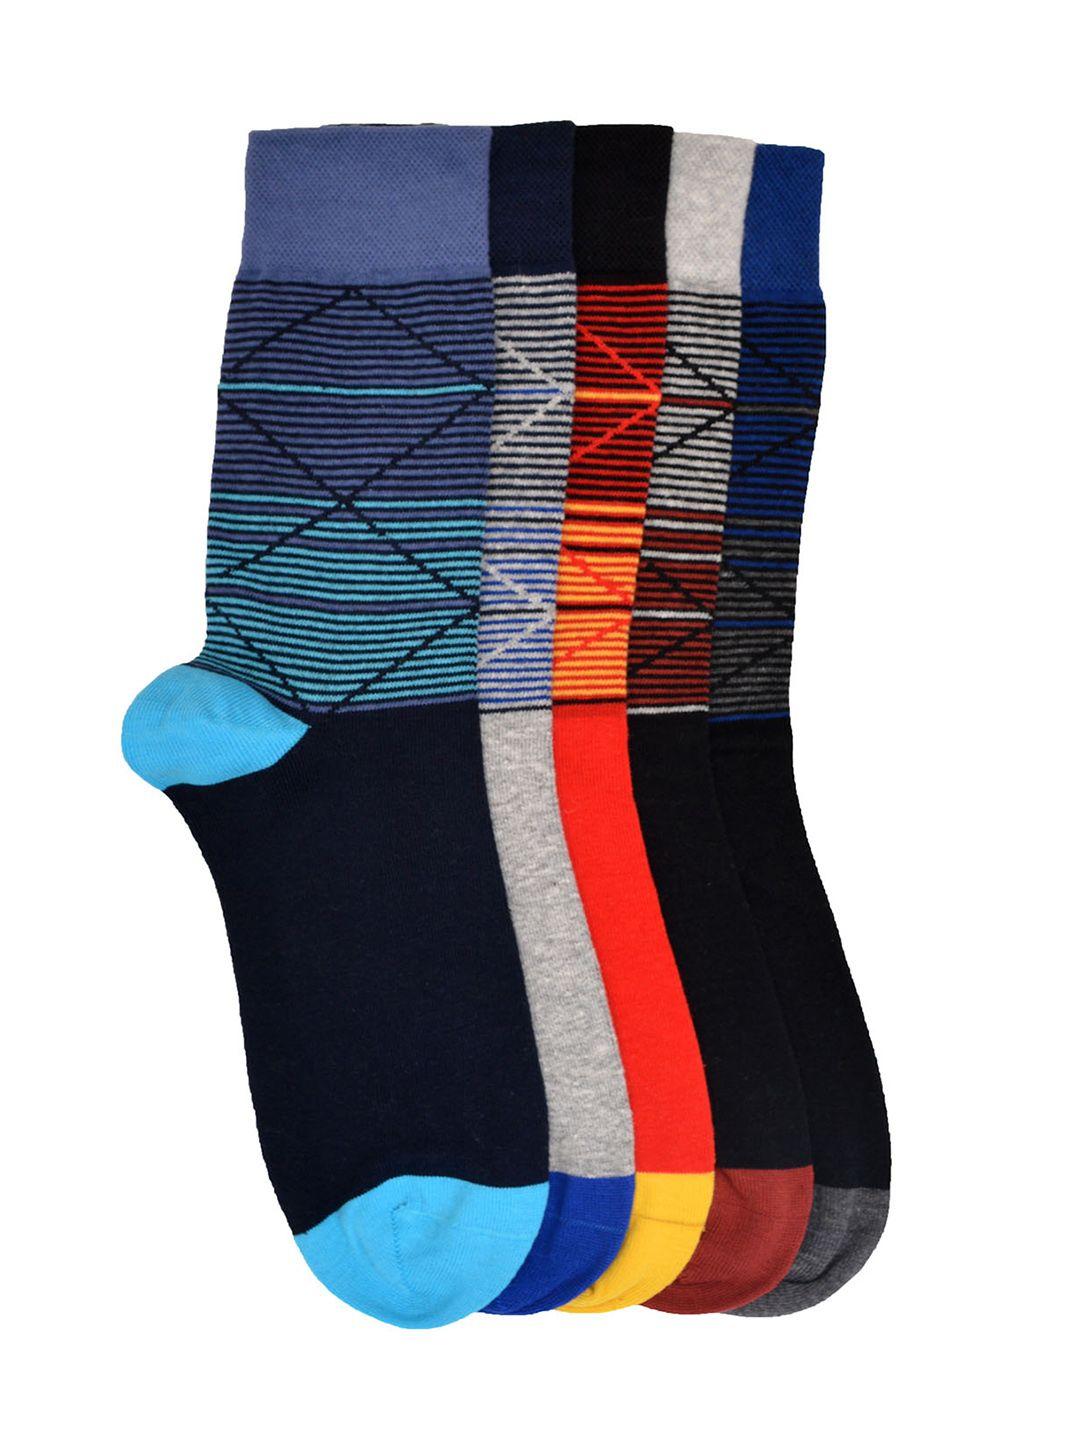 vinenzia men set of 5 patterned above ankle-length socks